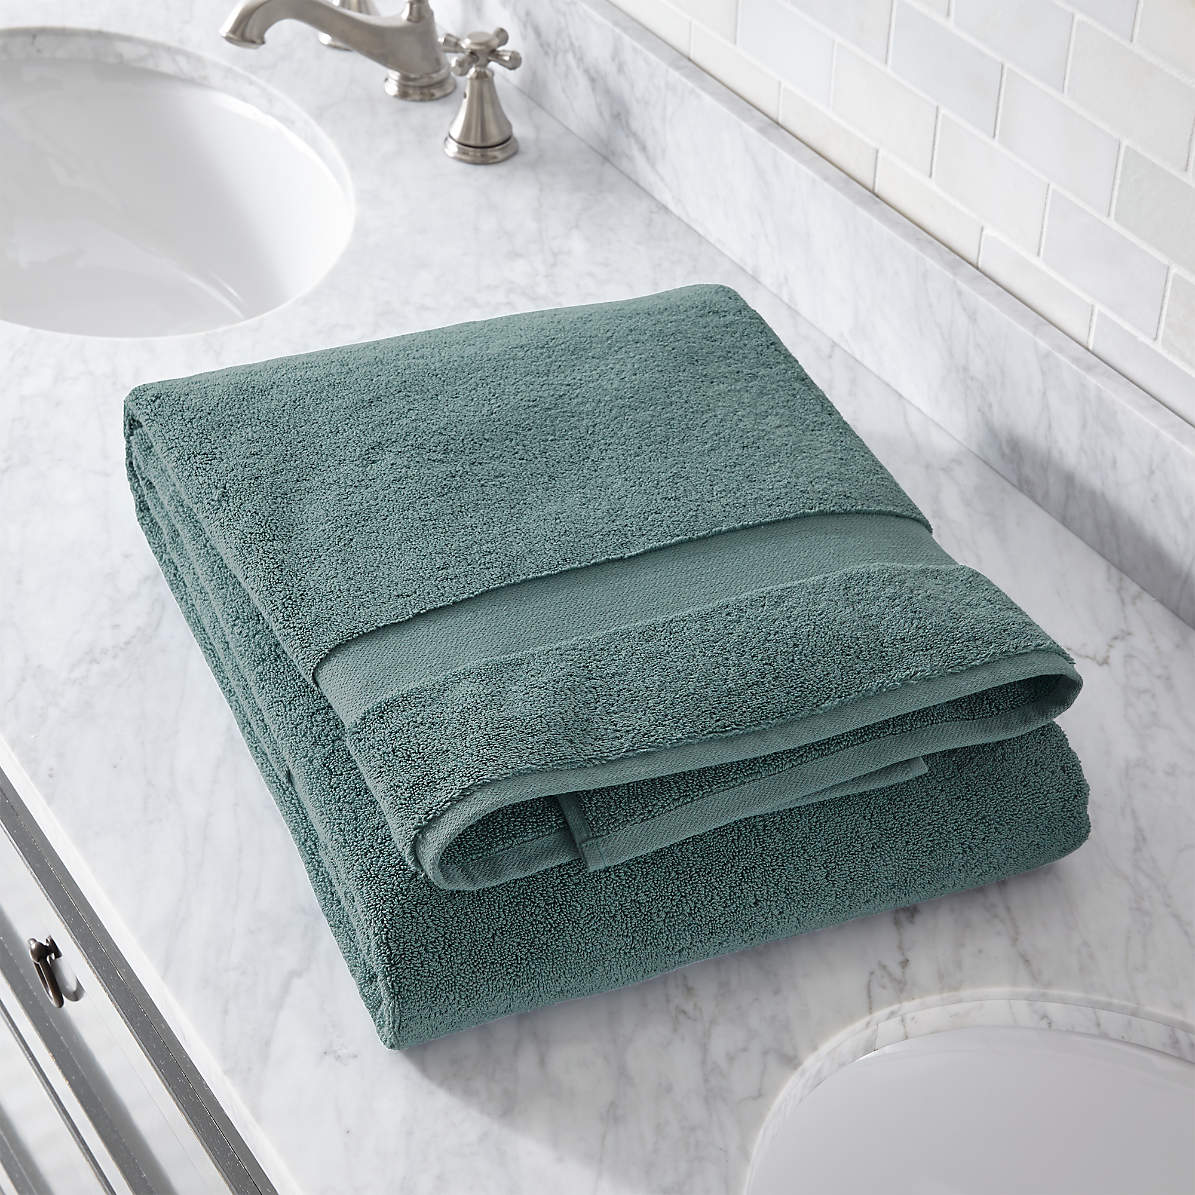 Details about   Turkish Hand Bath Towel Absorbent Dishcloth Bathroom Gym 45x20" 4Sets Light Blue 